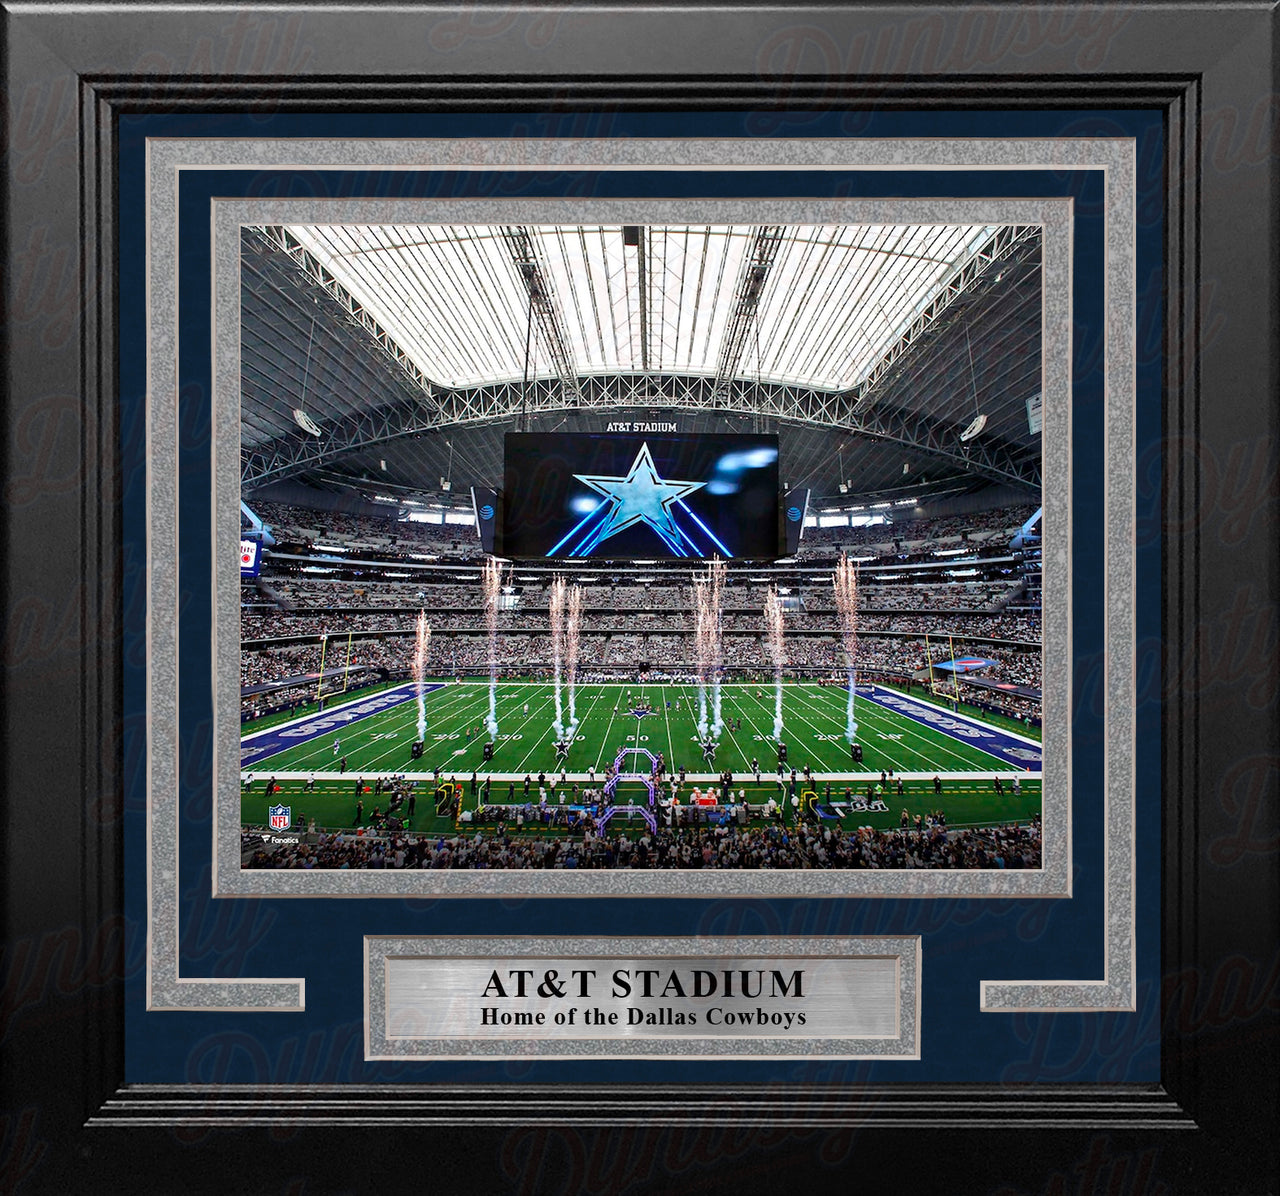 Dallas Cowboys AT&T Stadium 8" x 10" Framed Football Photo - Dynasty Sports & Framing 